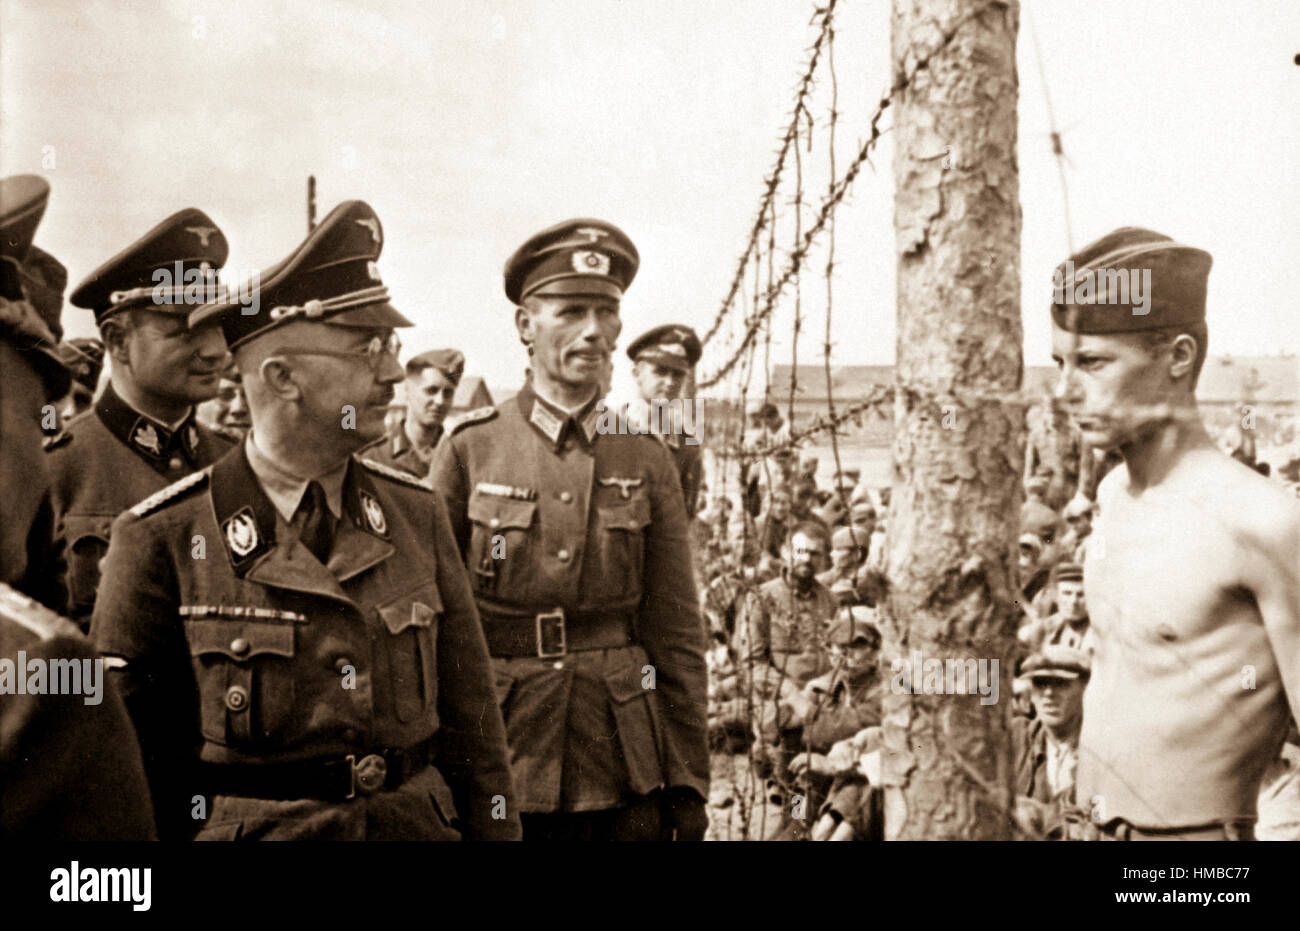 Himmler Duldung sterben Gefangenenlager in Russland.  Heinrich Himmler inspiziert ein Kriegsgefangenenlager in Russland.  Ca. 1940 / 41. Stockfoto